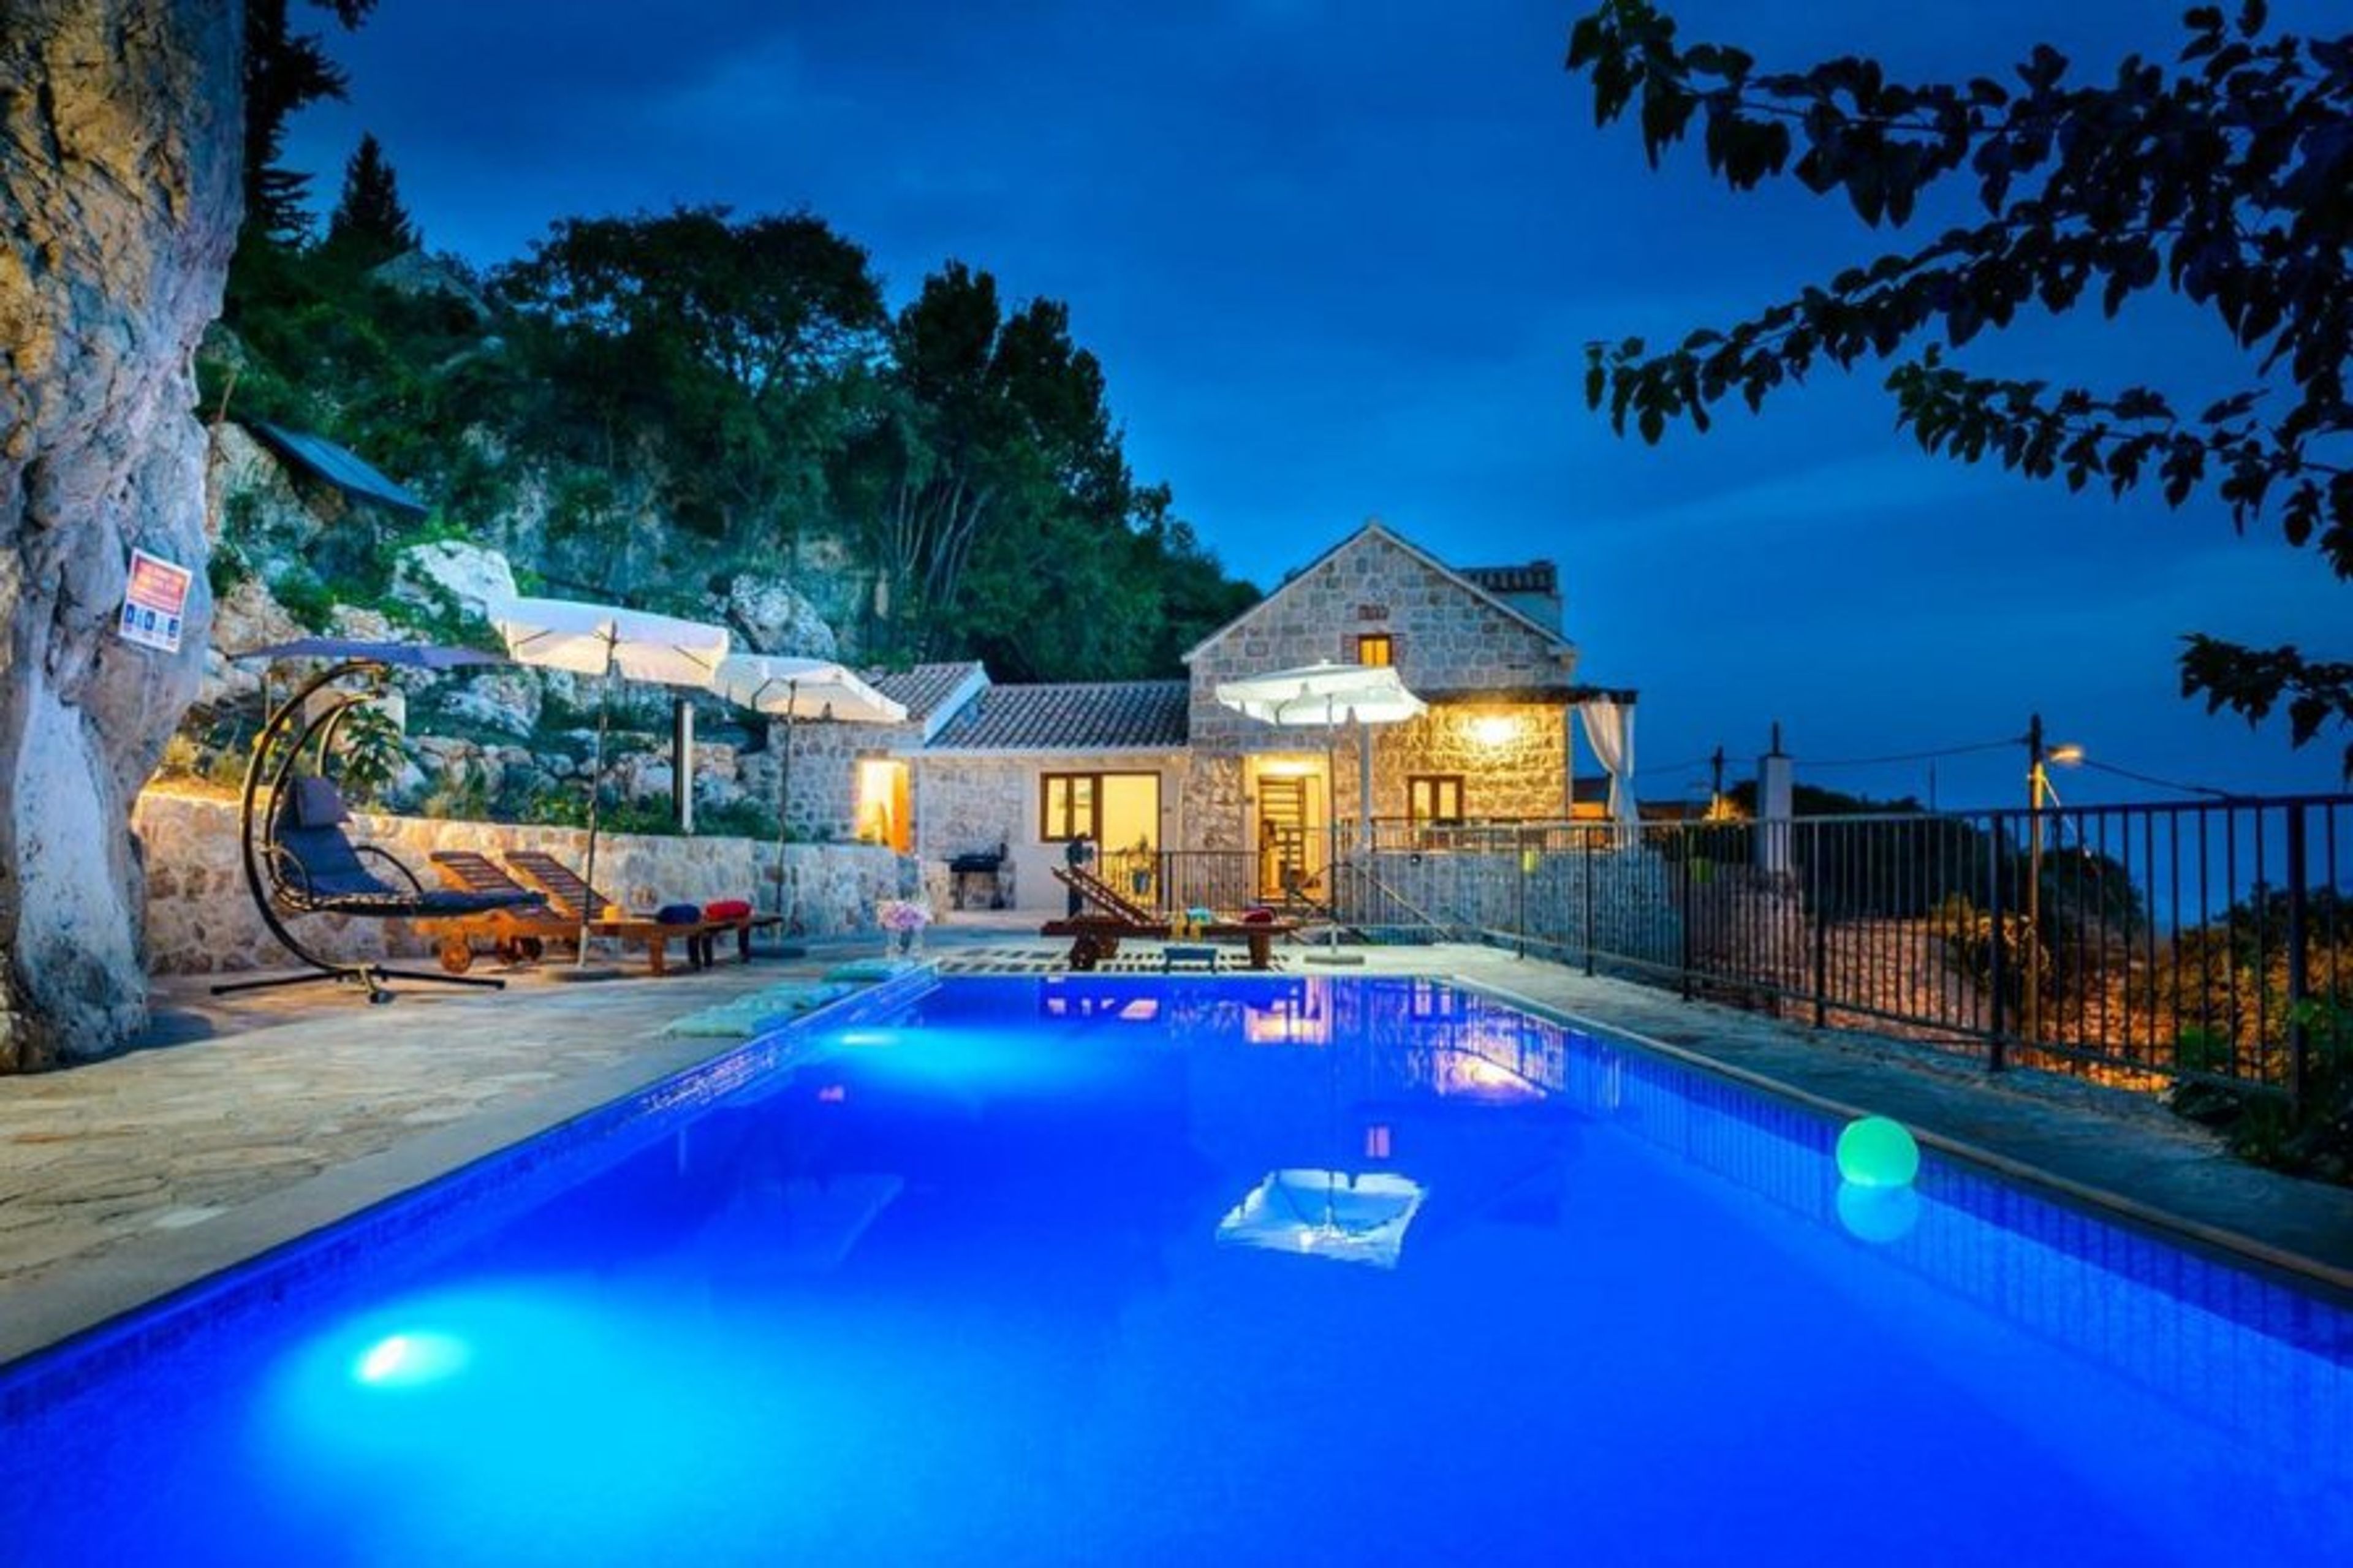 Villa with pool ate night